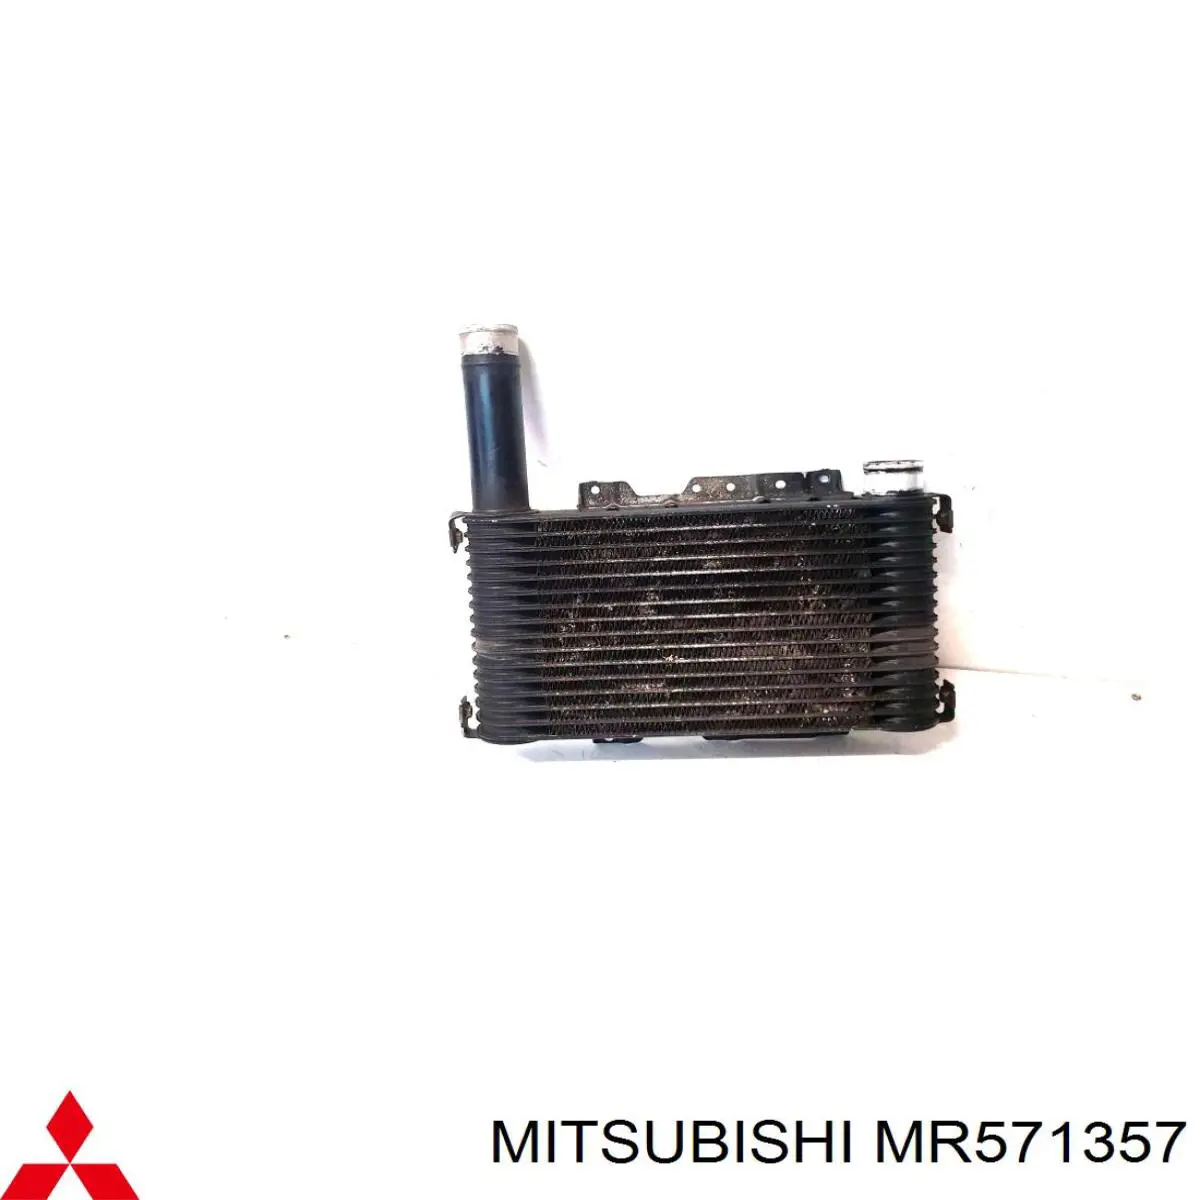 MR571357 Mitsubishi intercooler